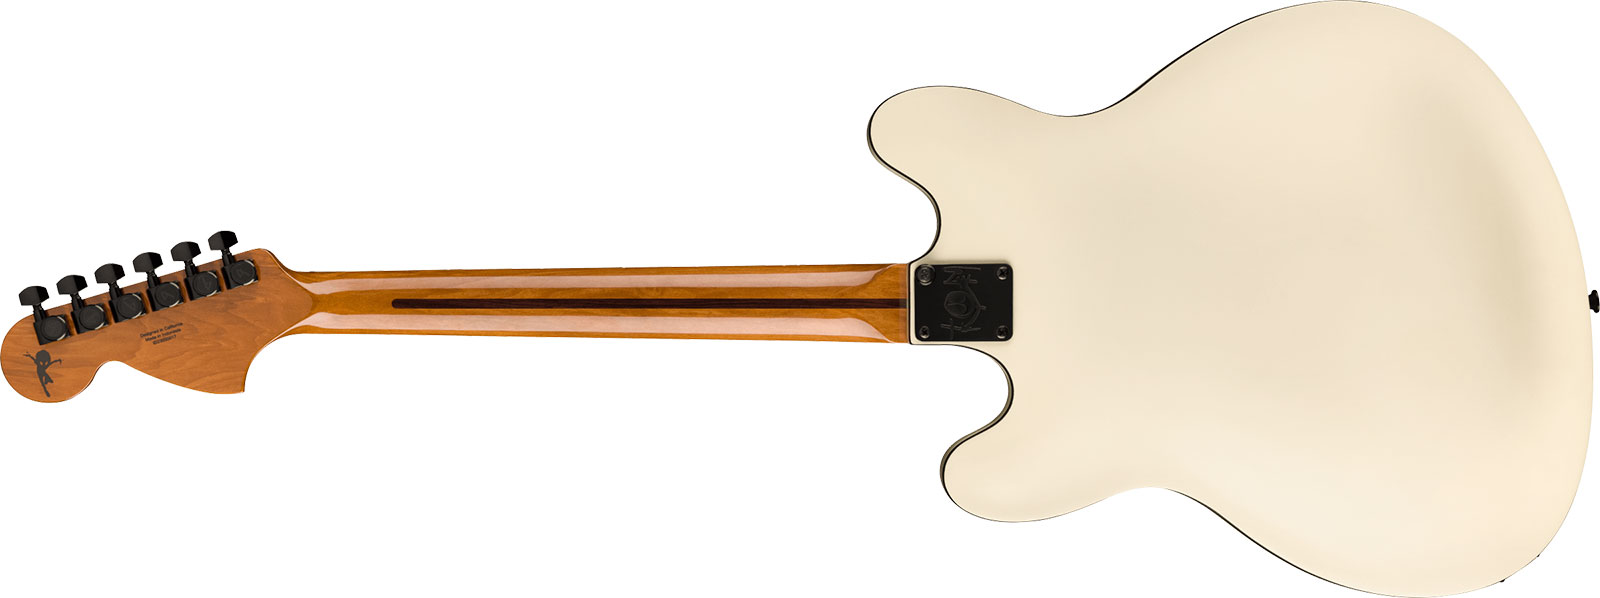 Fender Tom Delonge Starcaster Signature 1h Seymour Duncan Ht Rw - Satin Olympic White - Semi hollow elektriche gitaar - Variation 1